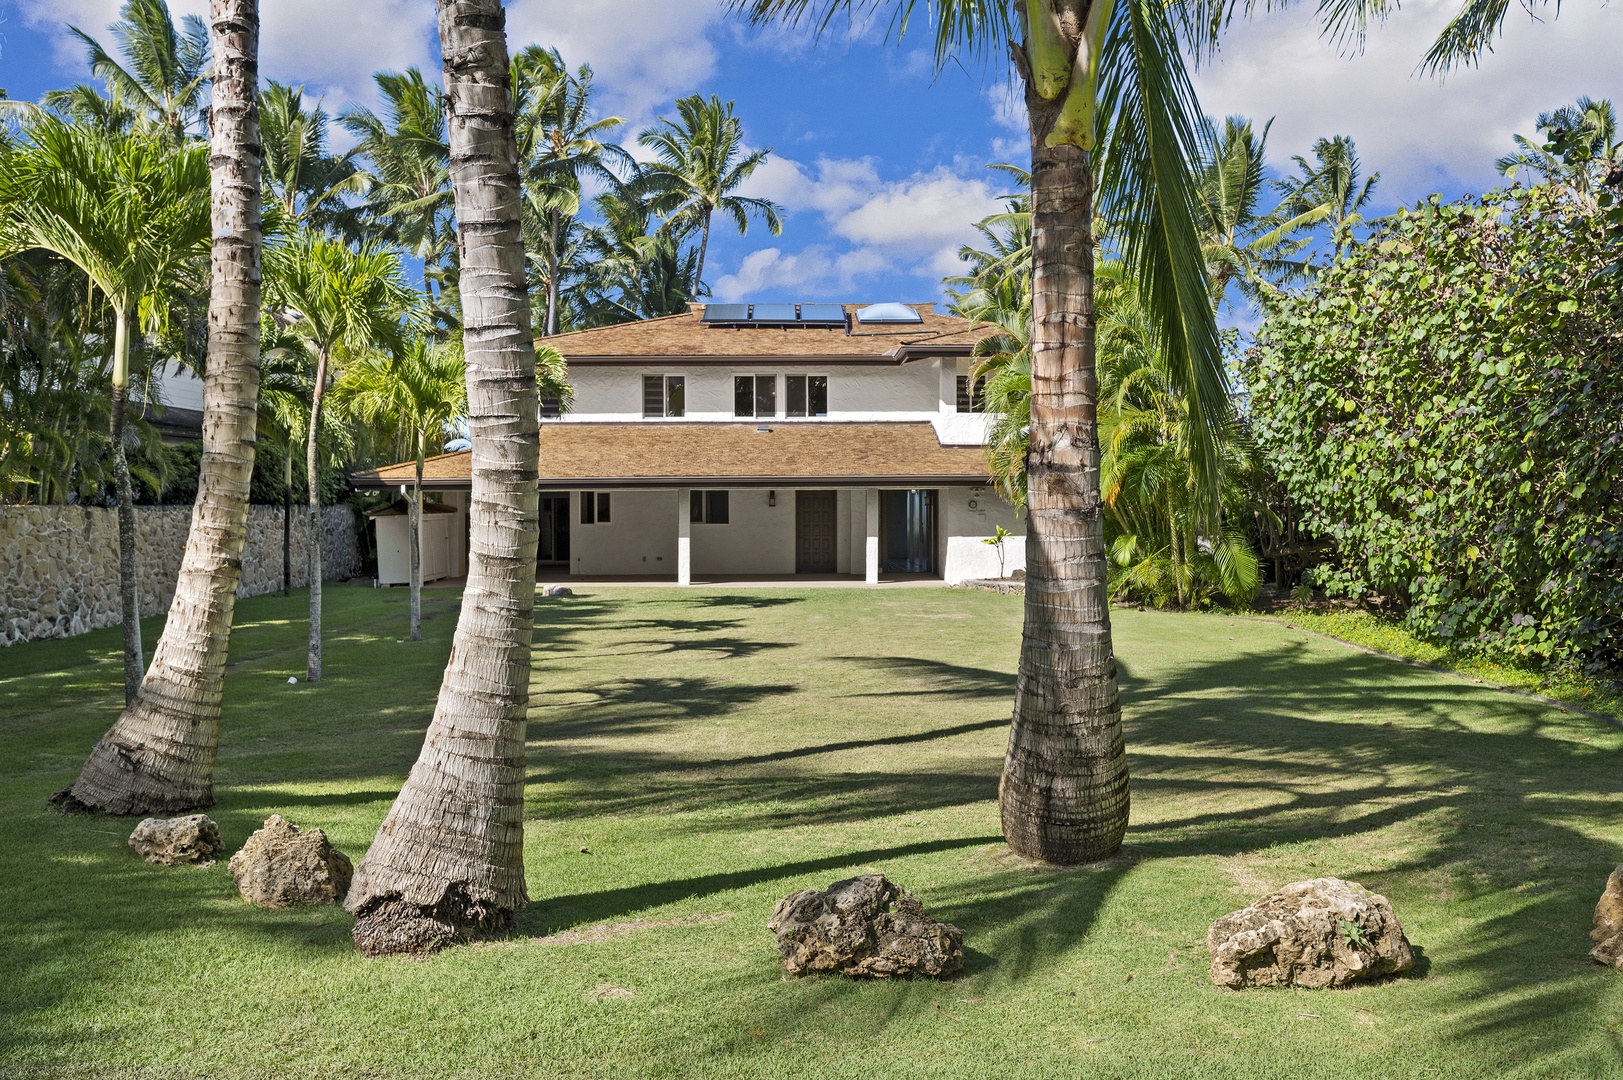 Kailua Vacation Rentals, Kailua Hale Kahakai - Surround yourself with beautiful palms and good times at Kailua Hale Kahakai